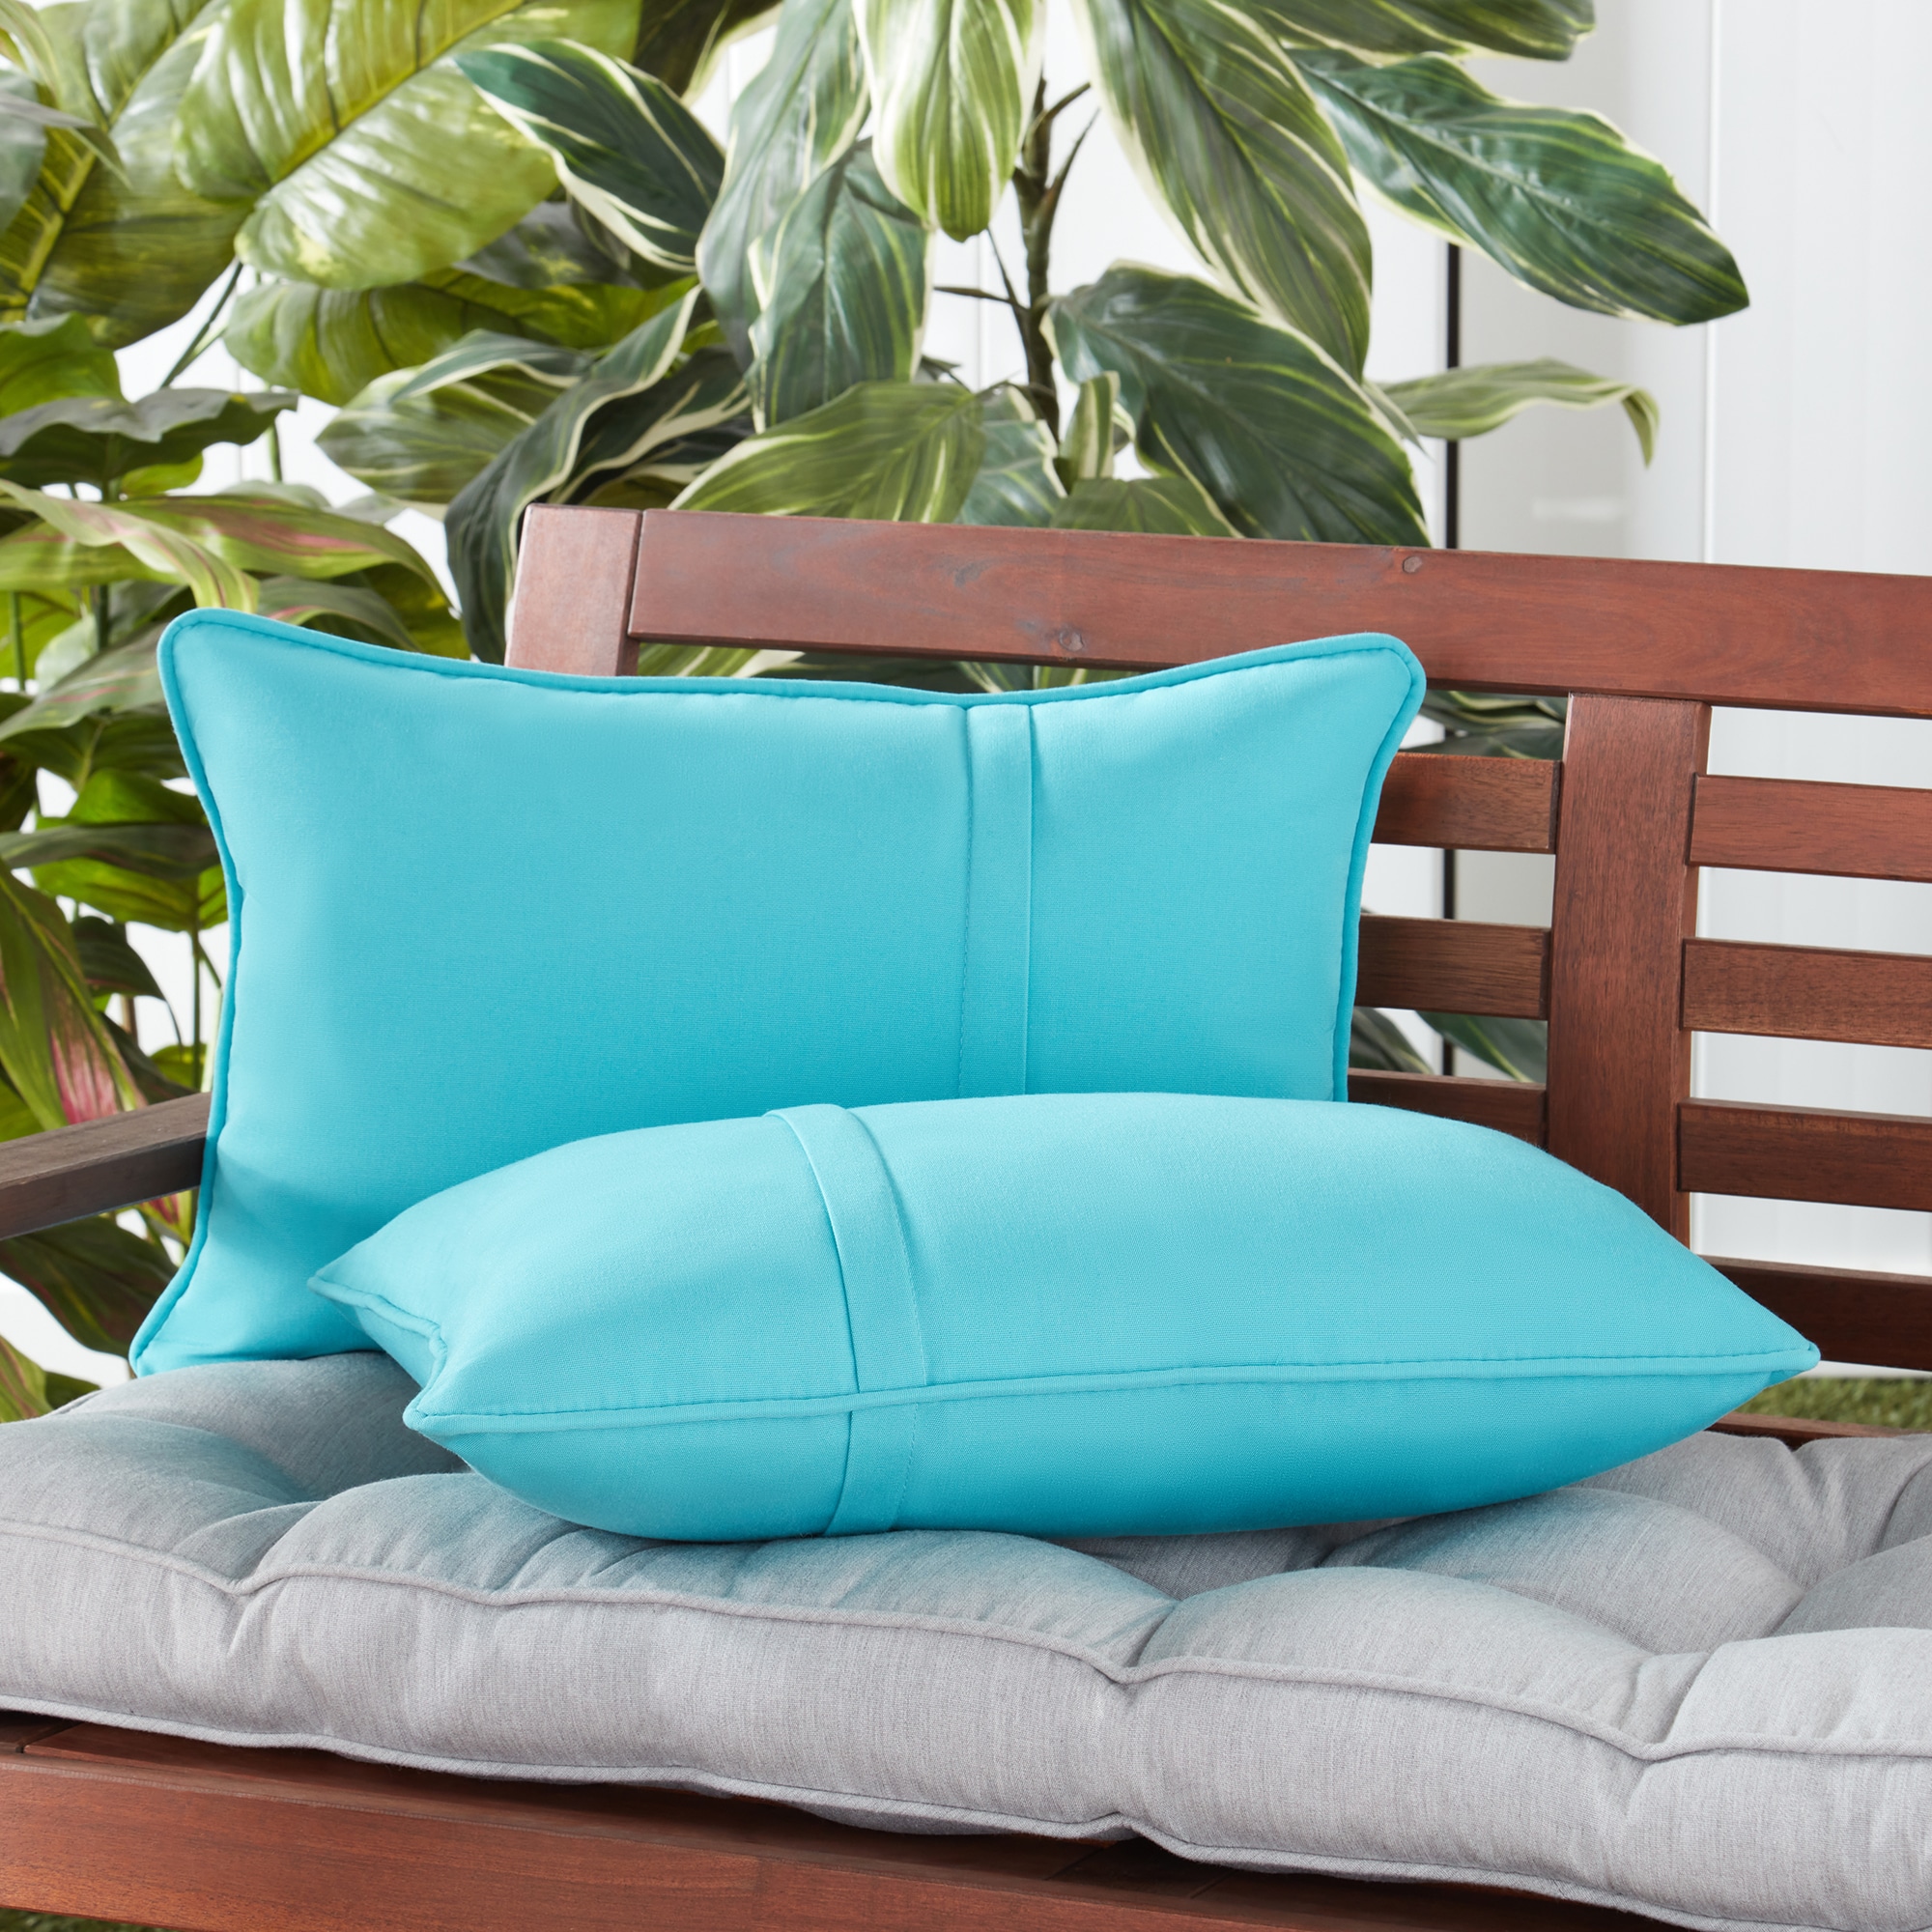 La Jolla Outdoor Water Resistant Rectangular Throw Pillows - Set of 4  Blue/White - Jailhouse, 1 unit - Jay C Food Stores